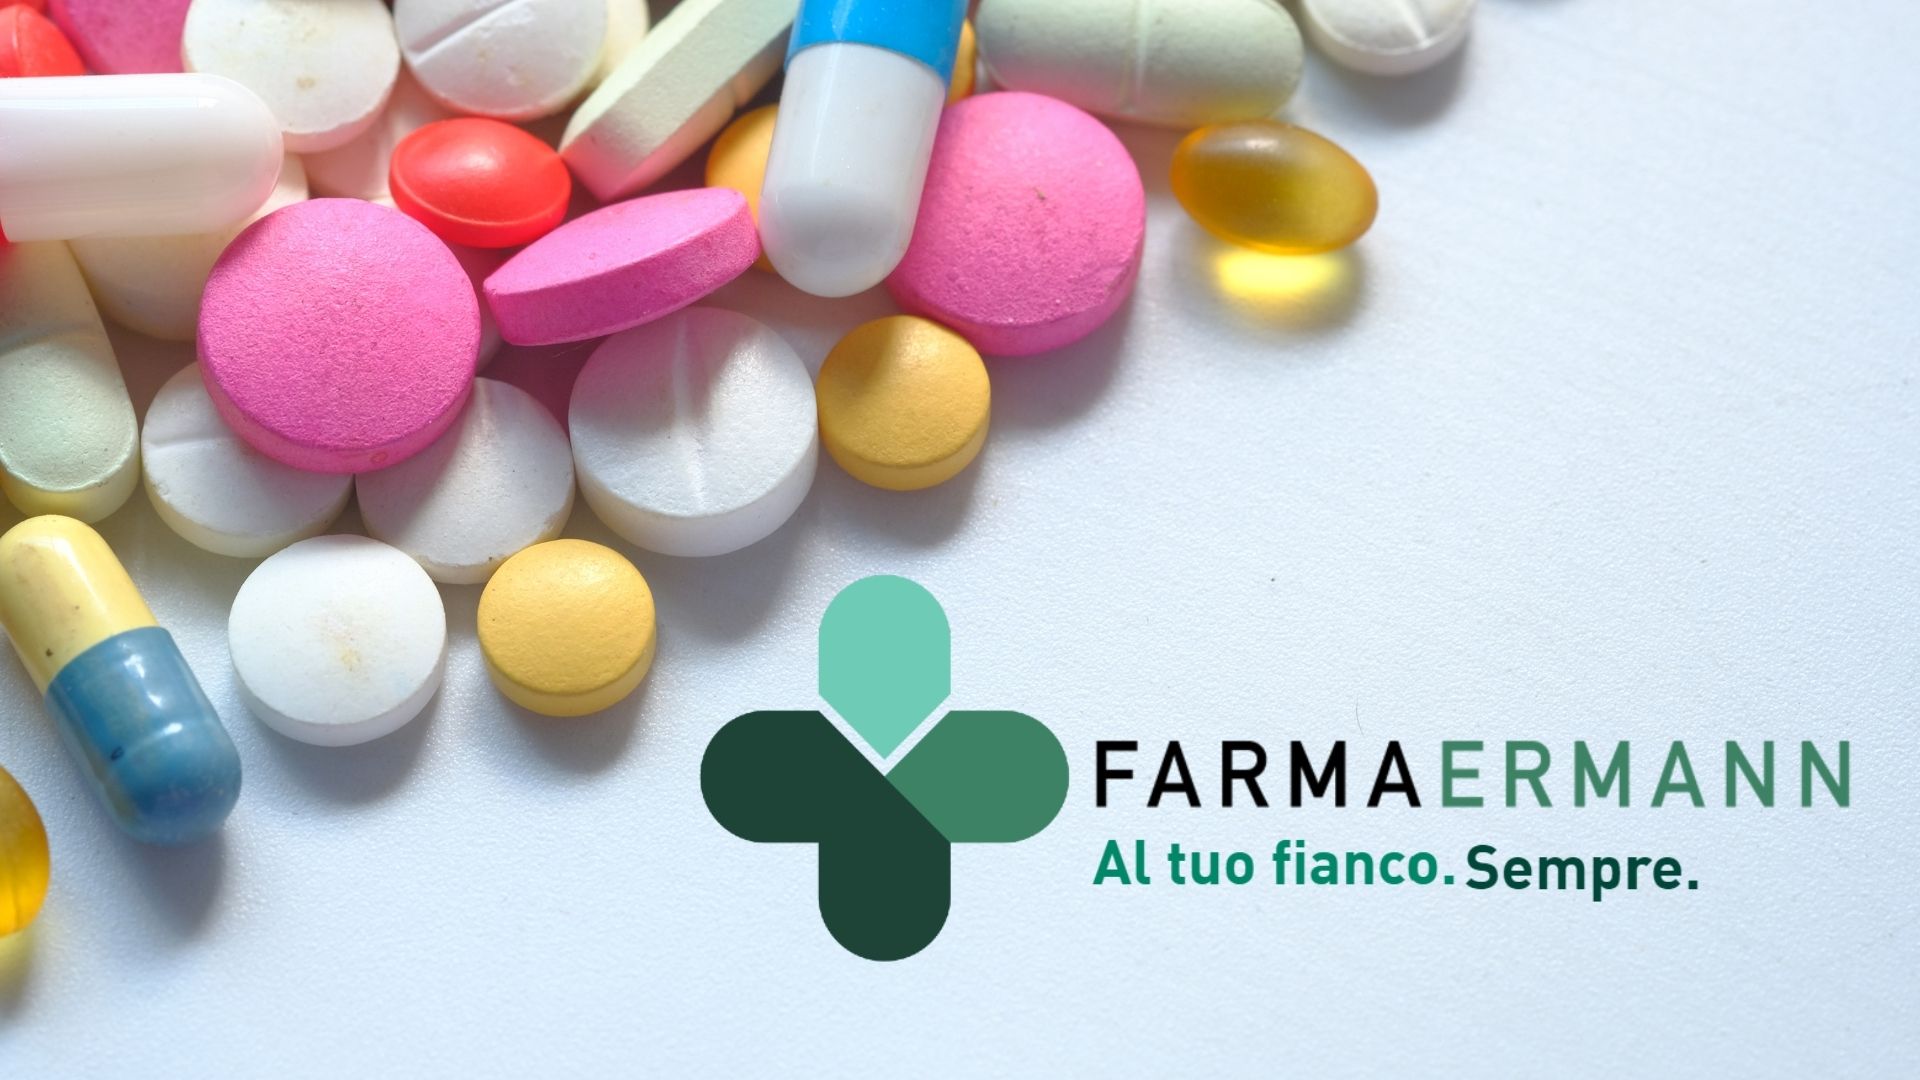 “Testimonianze dei clienti eShoppingAdvisor: Farmaermann, la farmacia online “storica” e innovativa”